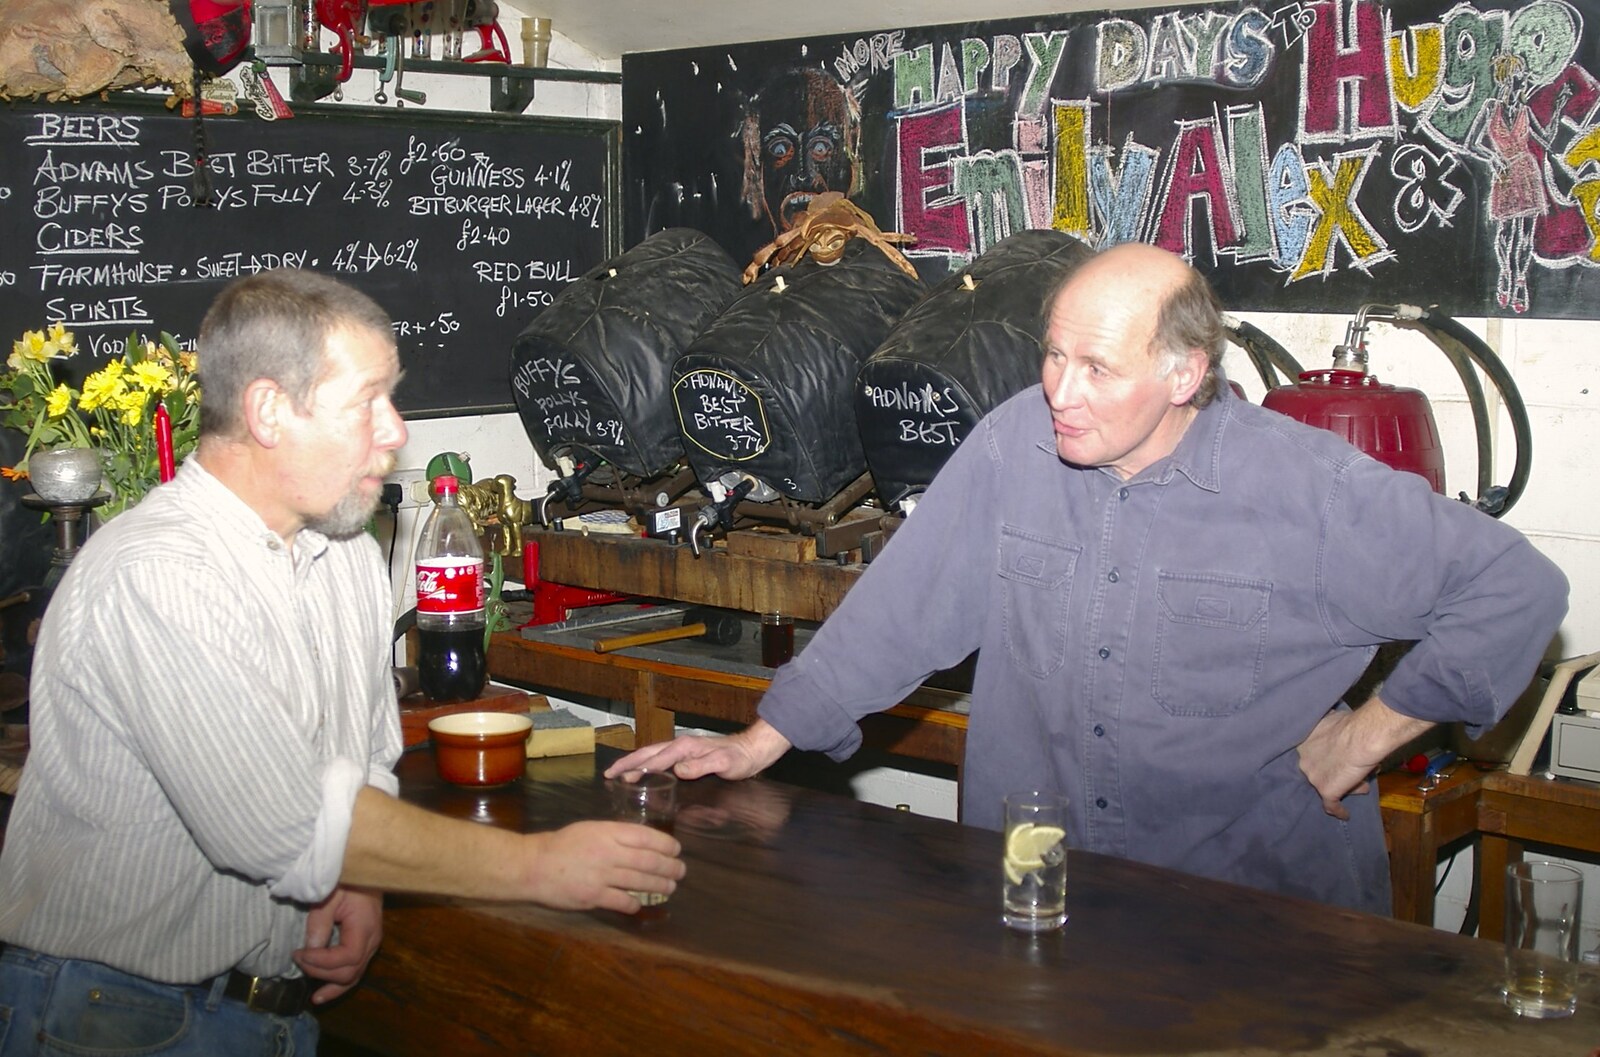 The BBs' Last-Ever Gig at The Cider Shed, Banham, Norfolk - 19th November 2004: Ryan chats to a punter